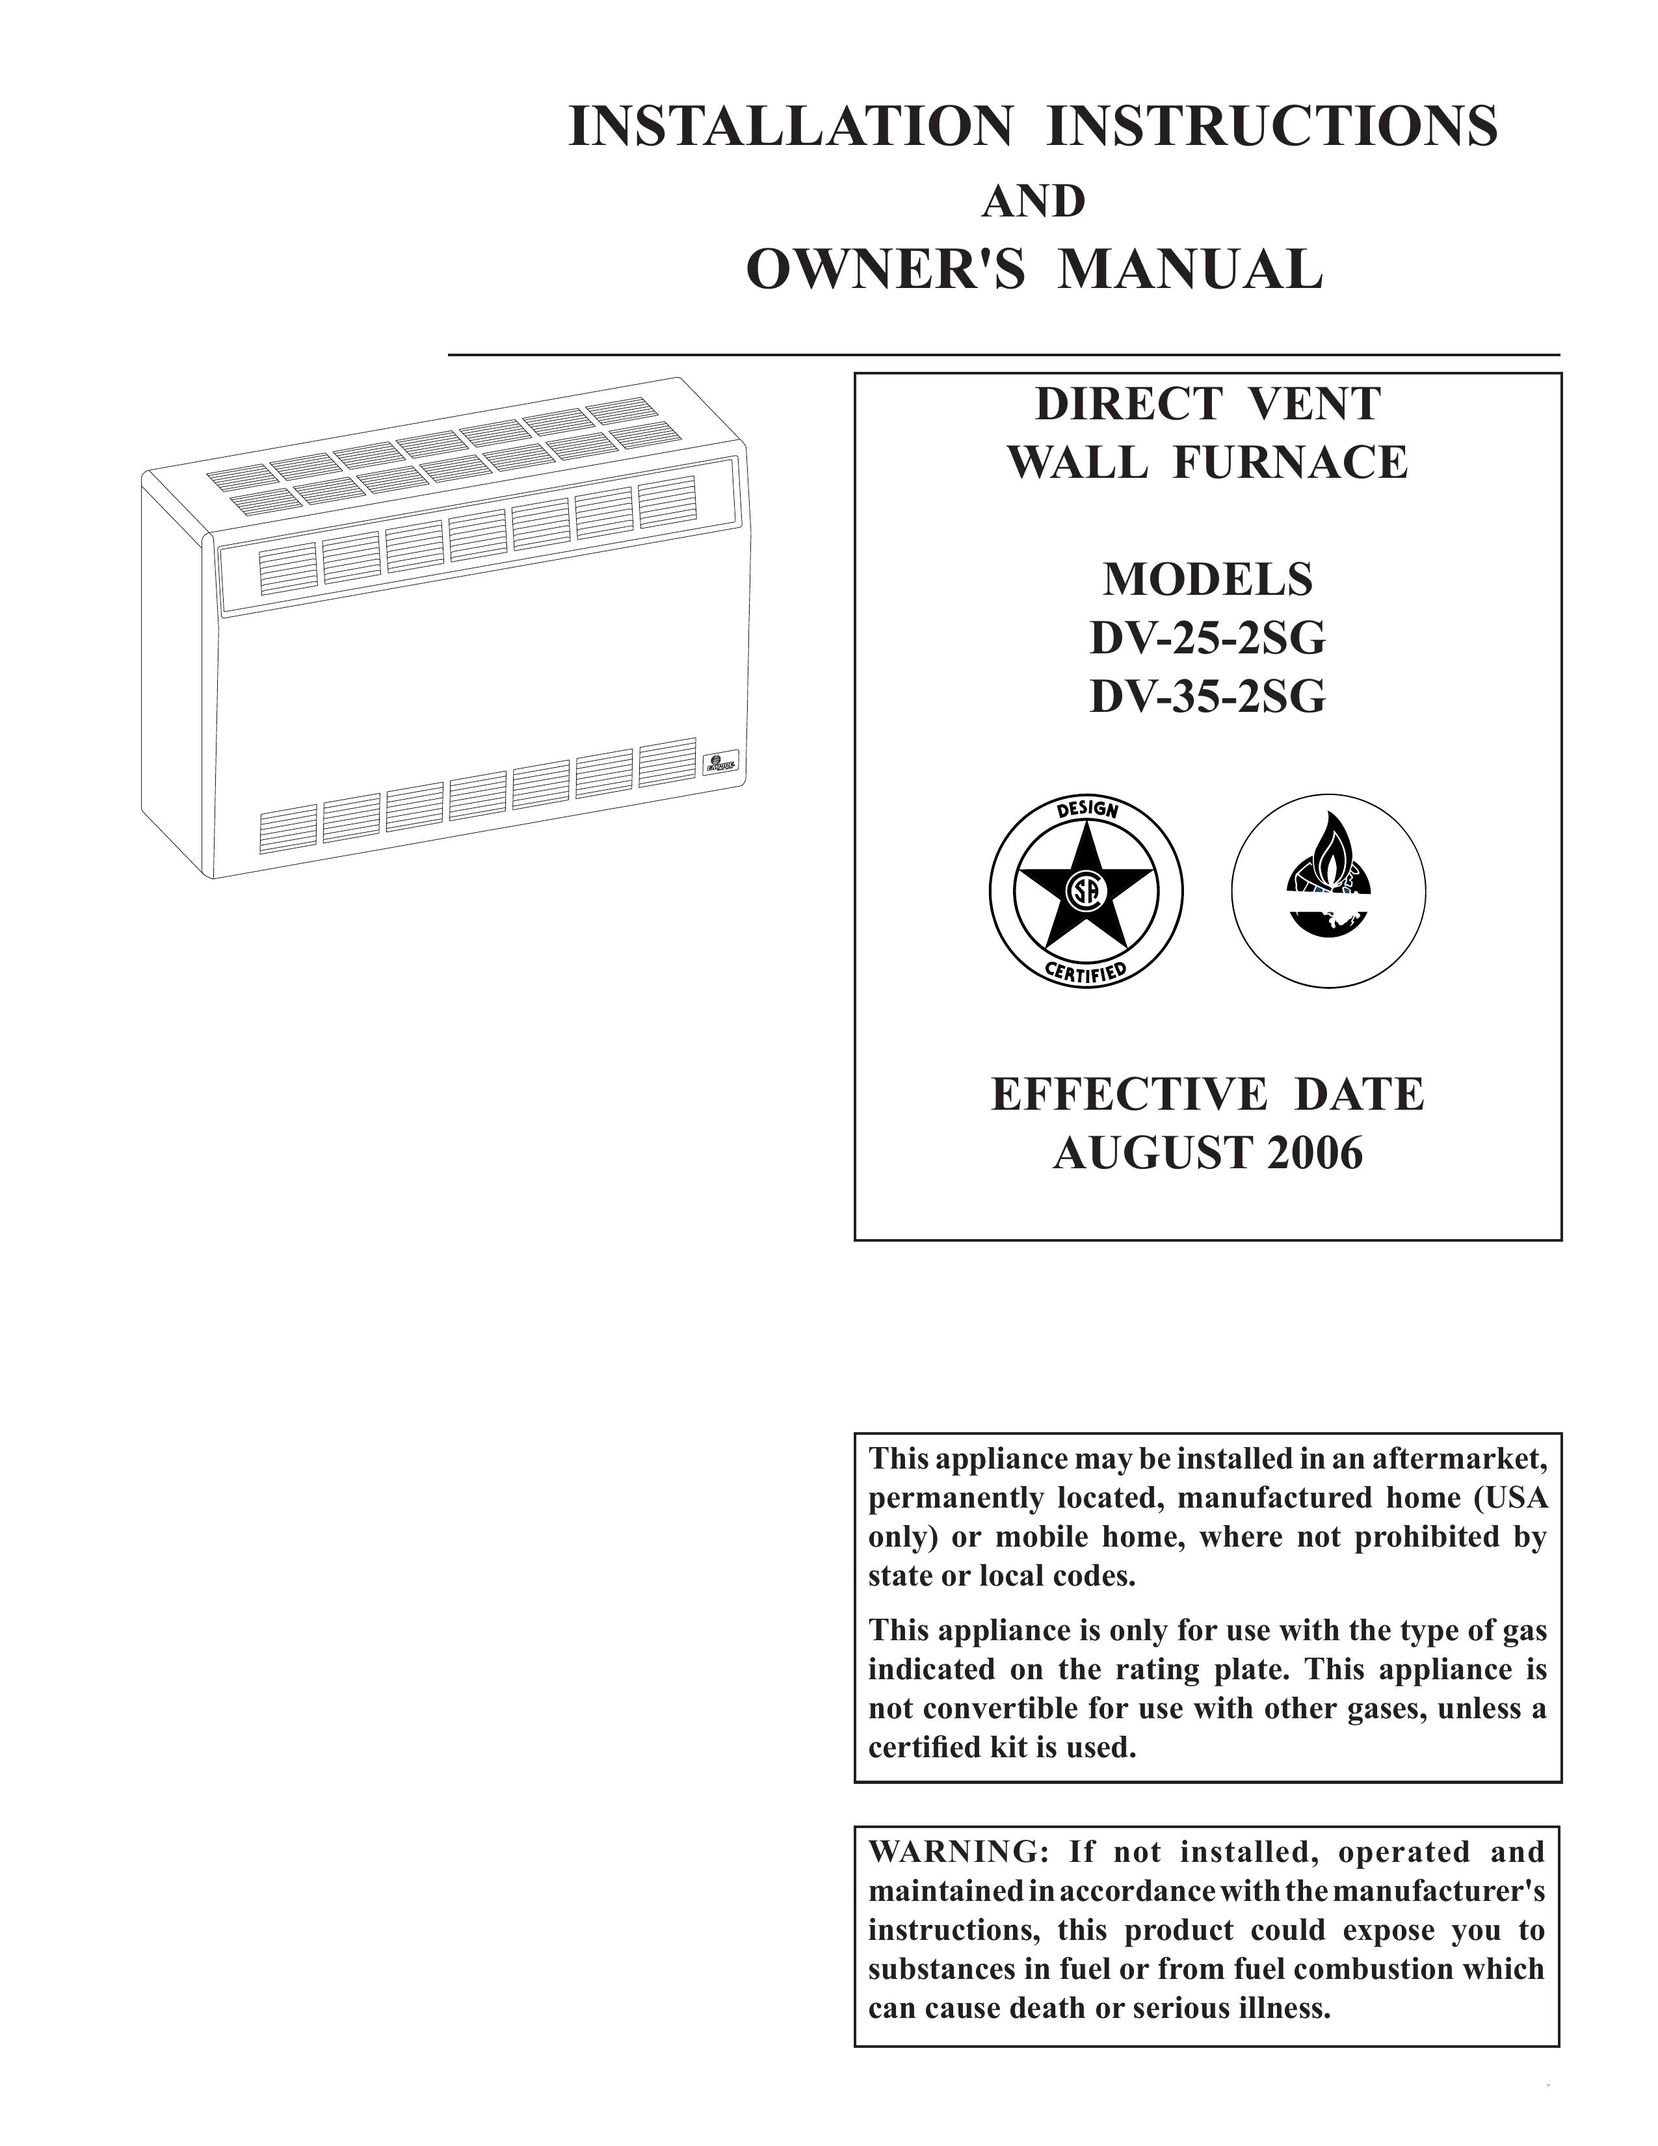 Empire Comfort Systems DV-25-2SG Furnace User Manual